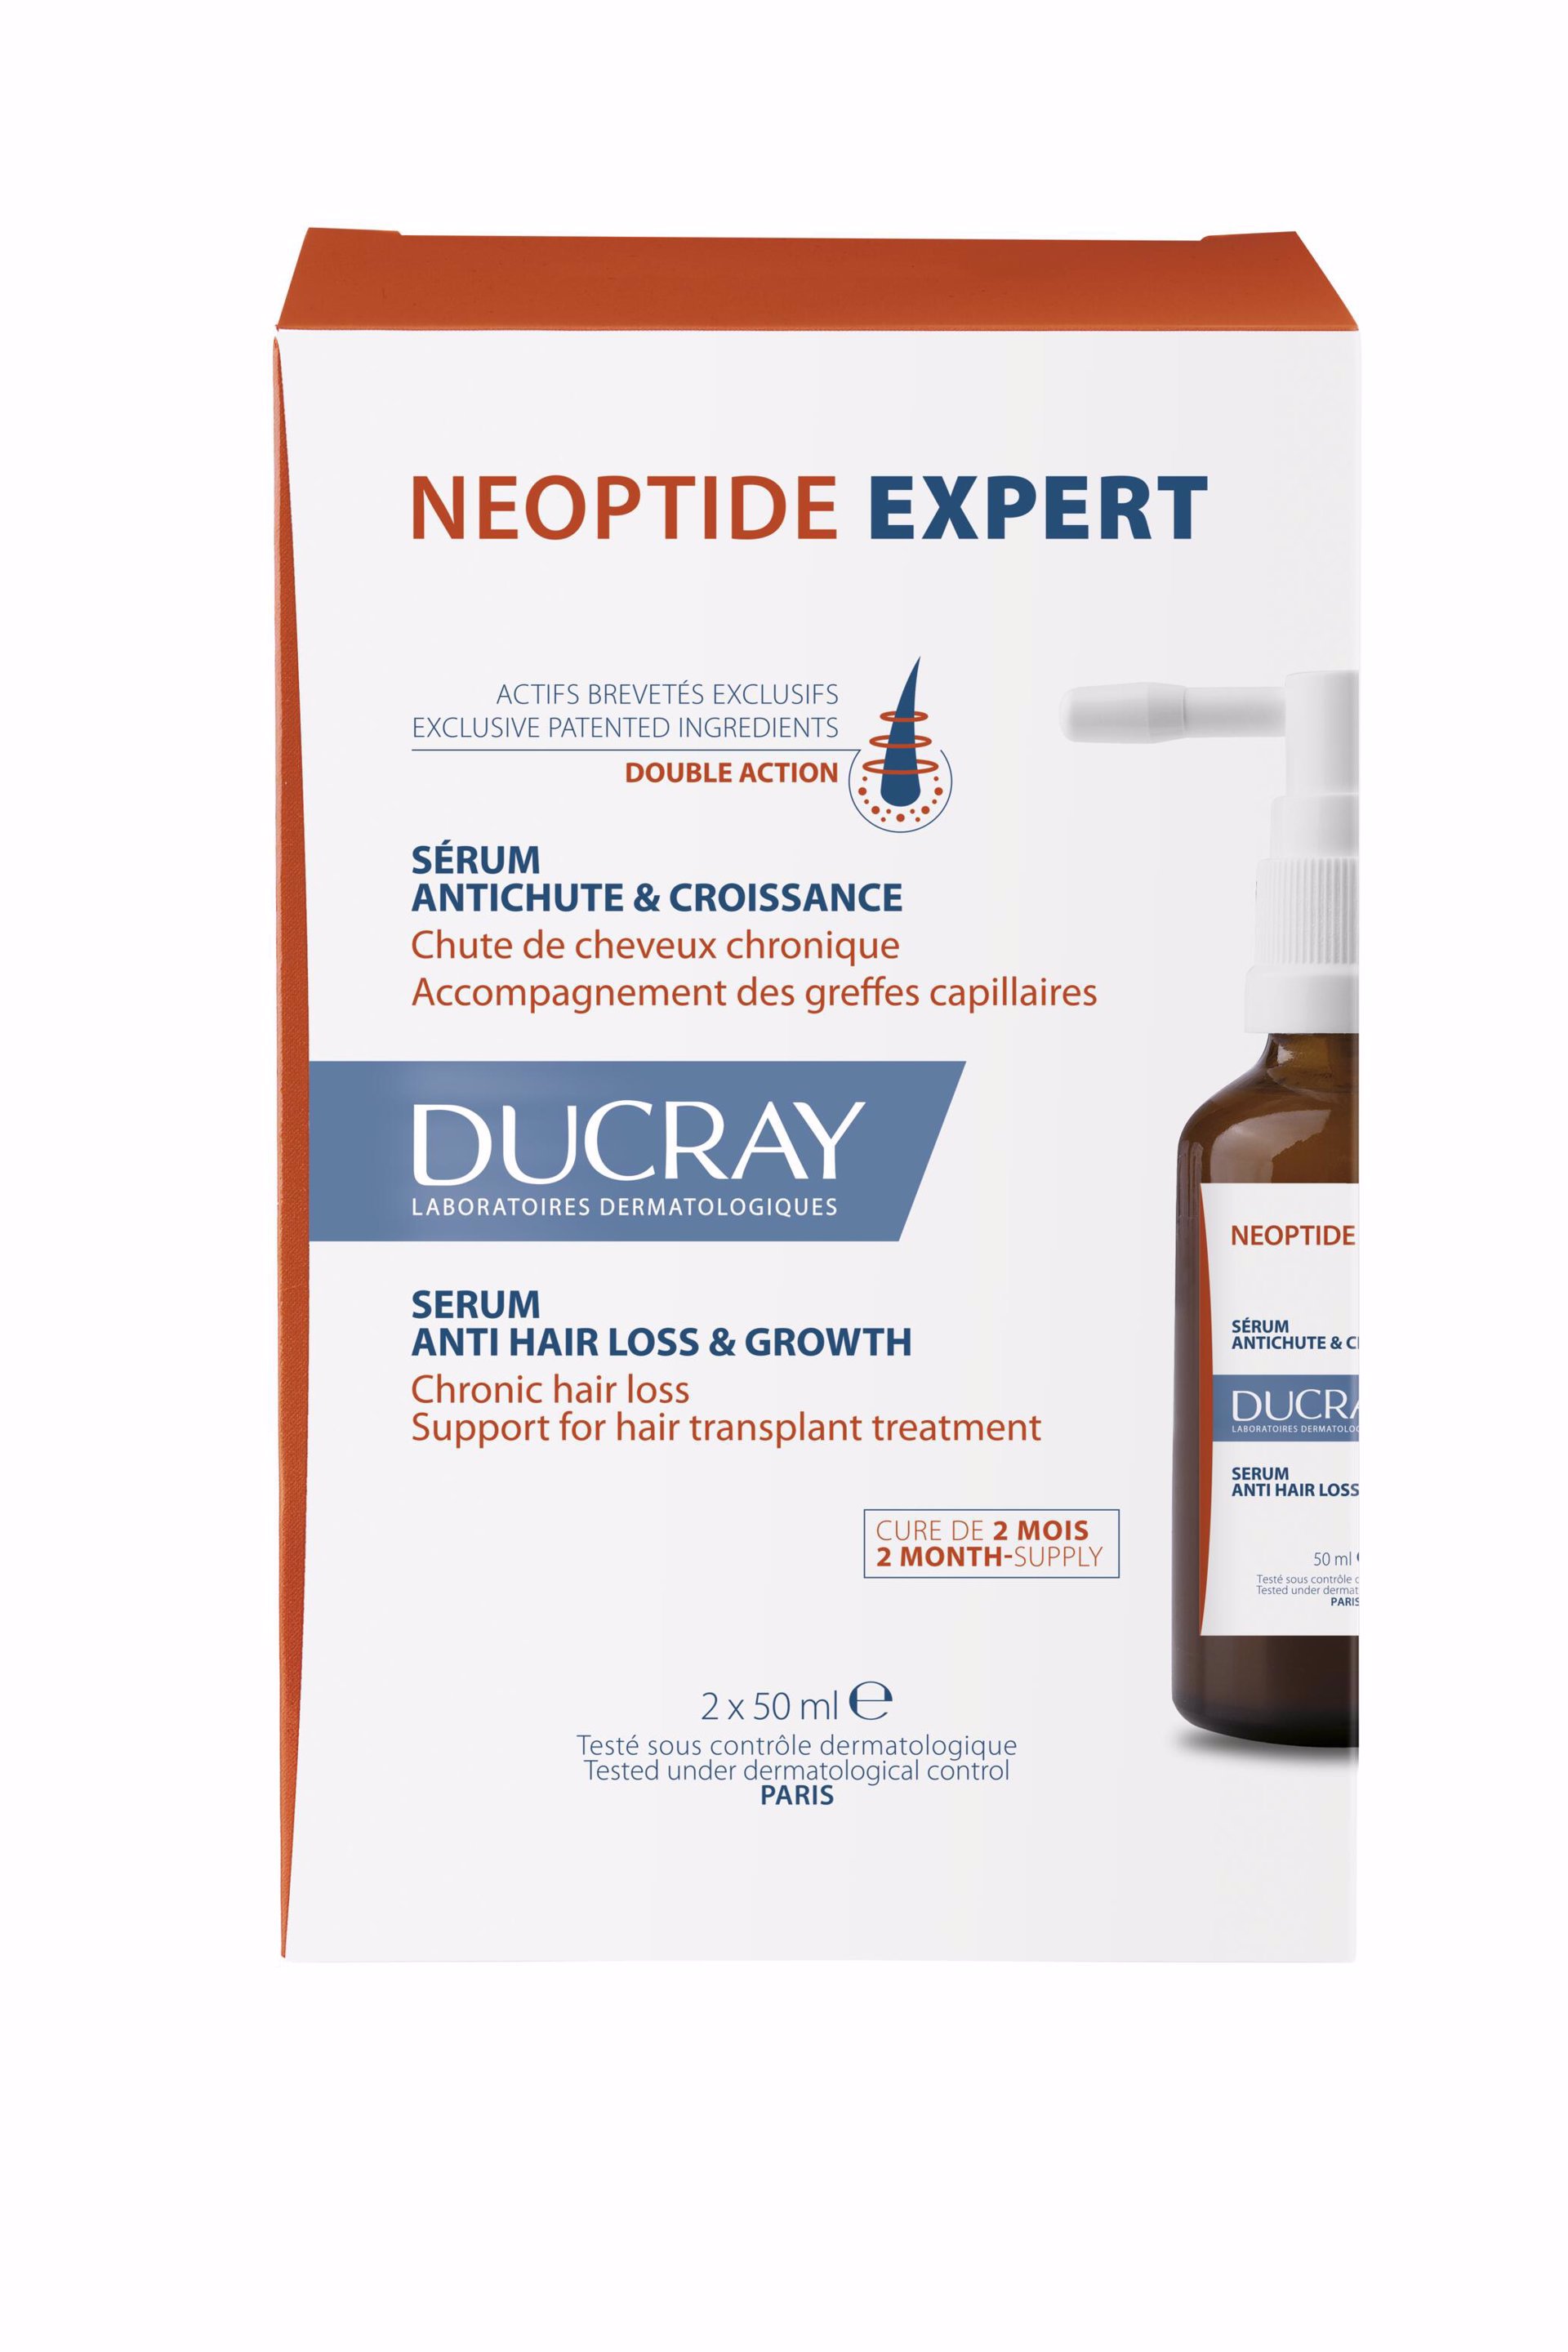 Neoptide Expert